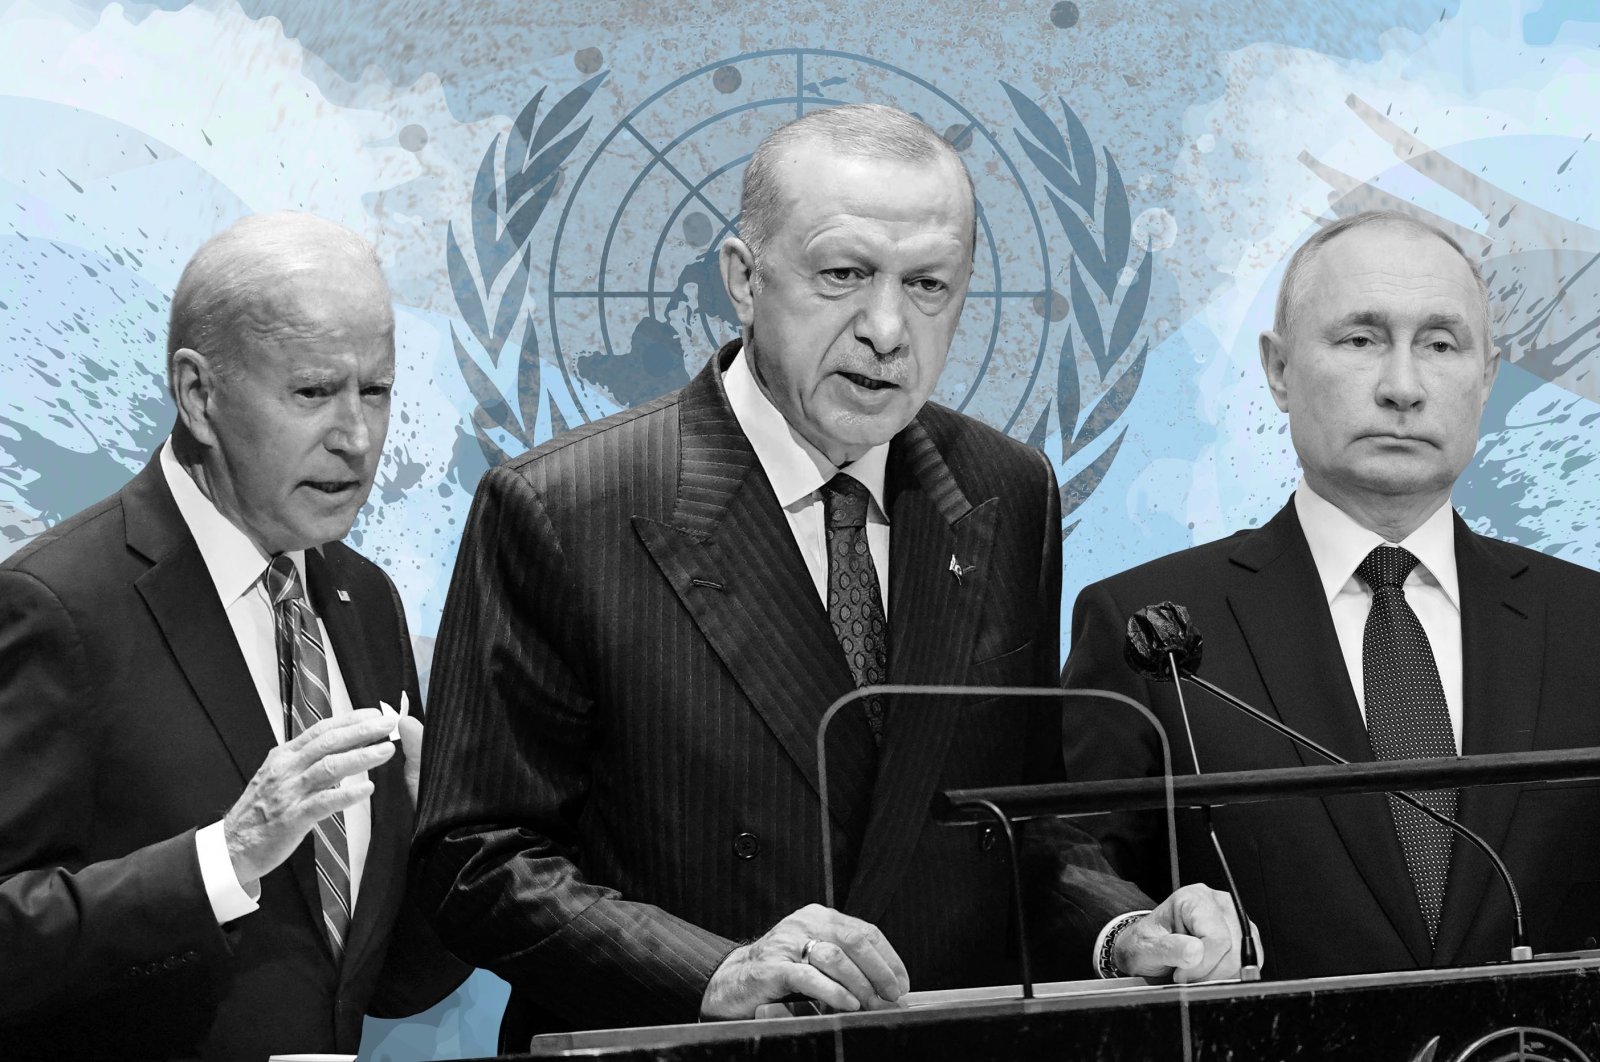 A photo illustration by Daily Sabah's Büşra Öztürk shows (L-R) U.S. President Joe Biden, President Recep Tayyip Erdo€an and Russian President Vladimir Putin with the logo of the United Nations in the background.